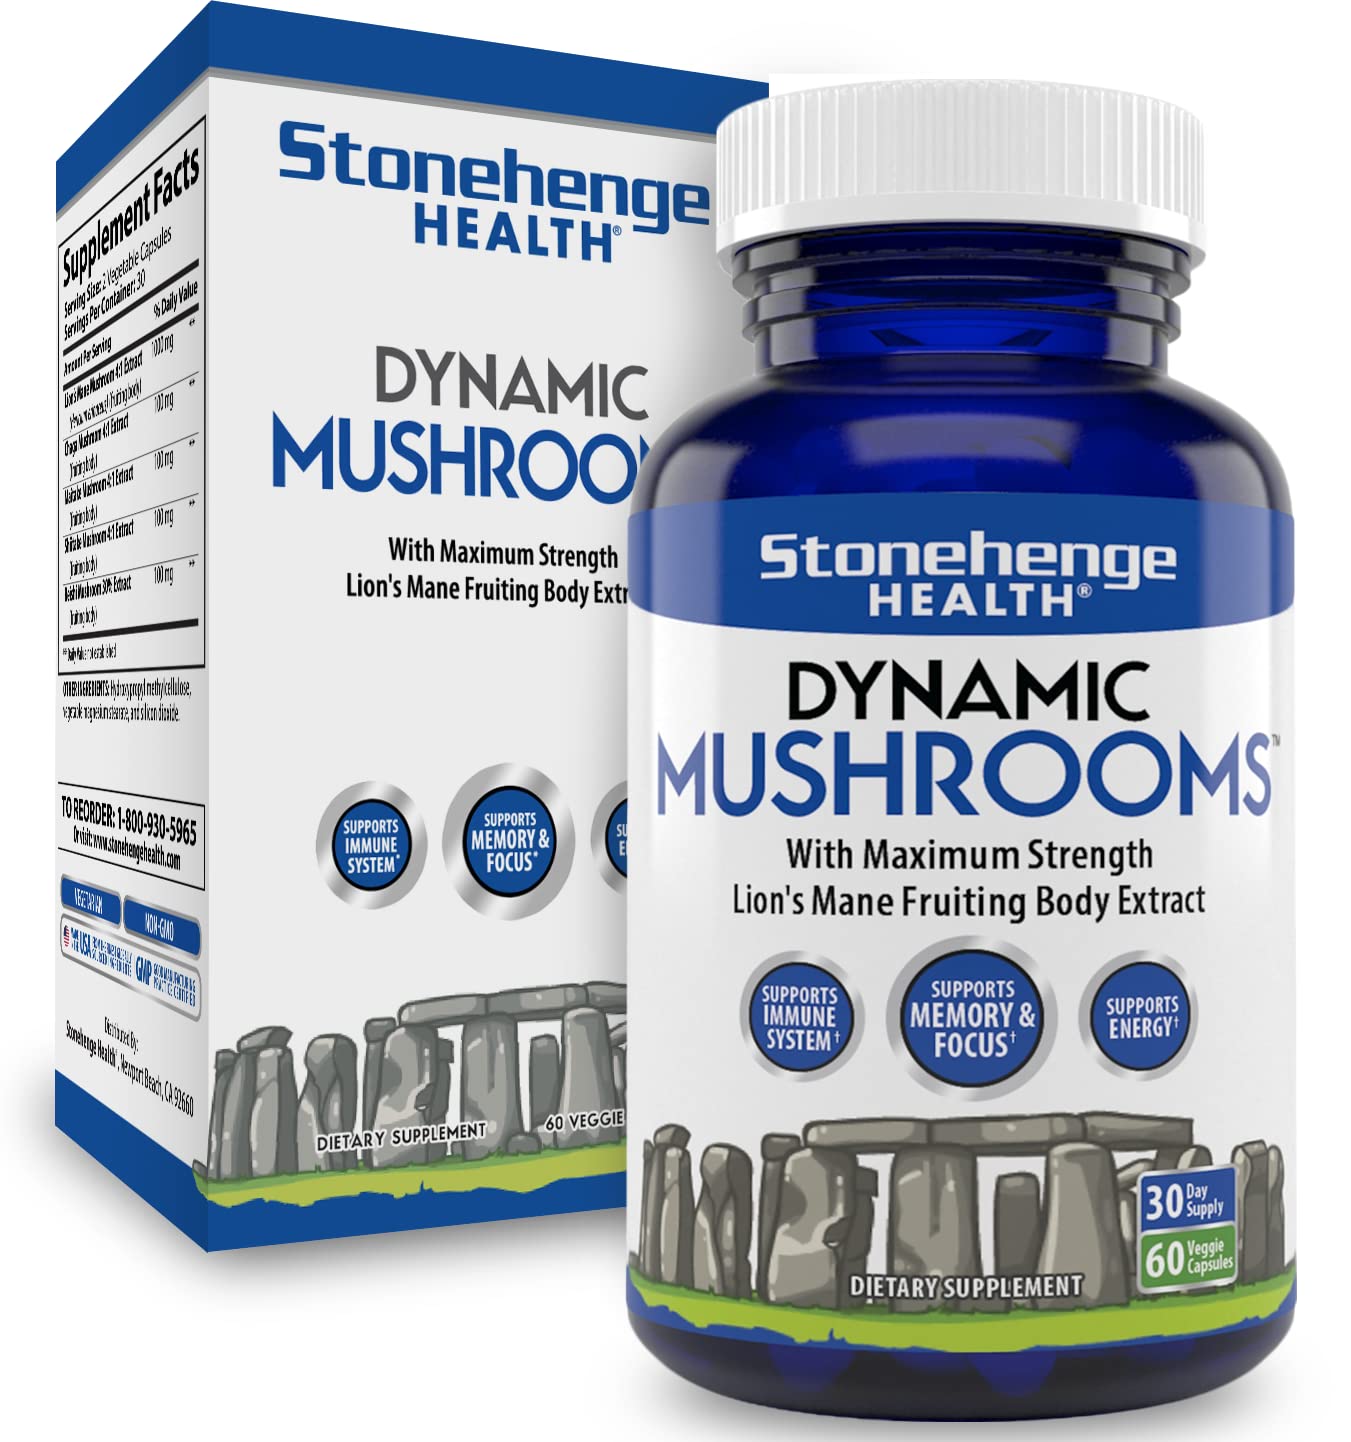 Stonehenge Health Dynamic Brain, Dynamic Mushrooms: Nootropics for Memory, Focus, Clarity Support